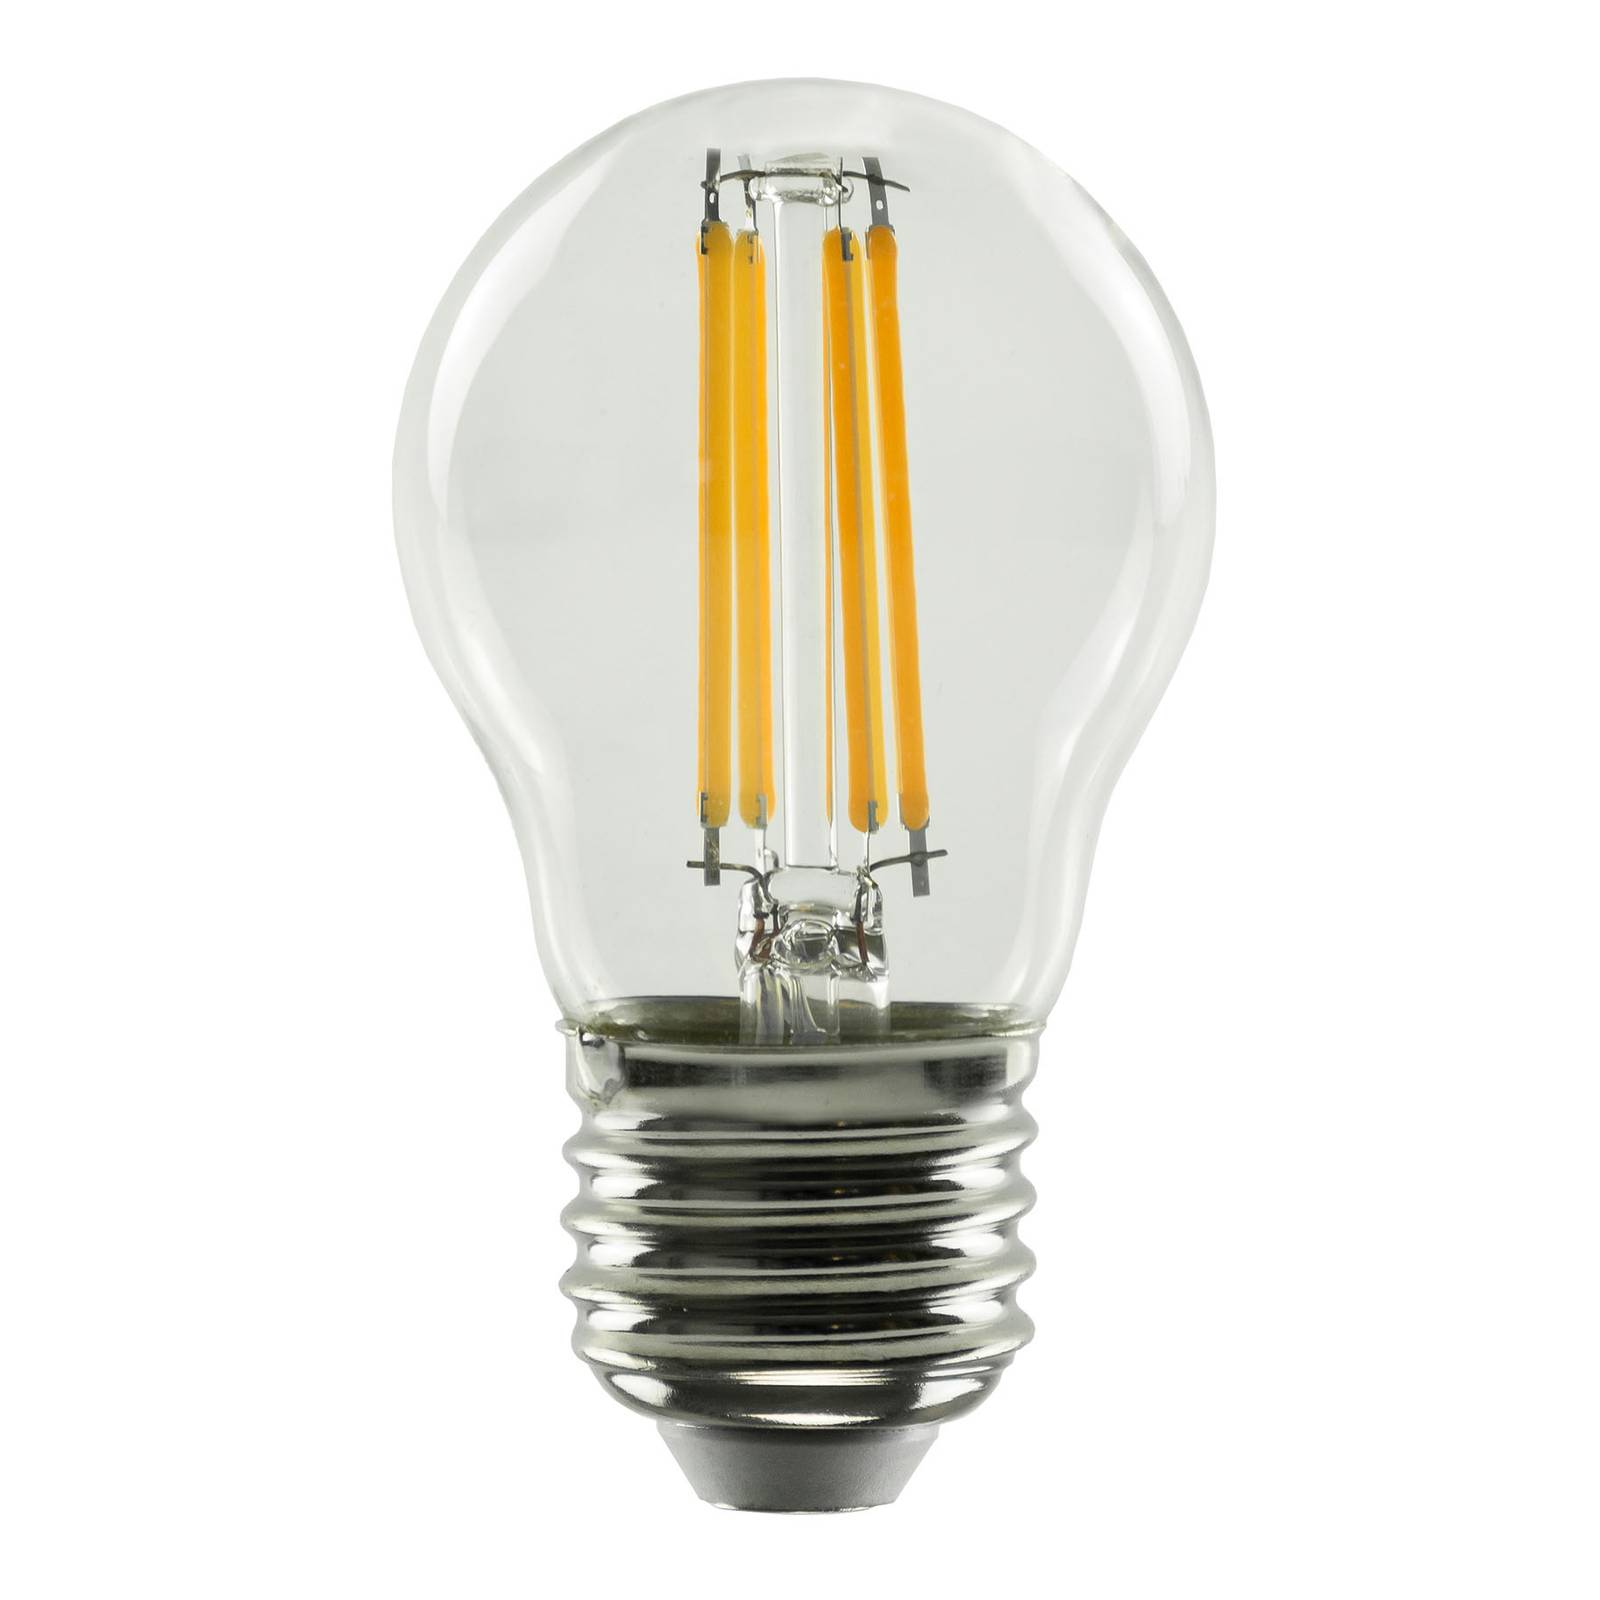 Image of TUNGSRAM ampoule LED E27 G45 827 filament claire 5994100043478